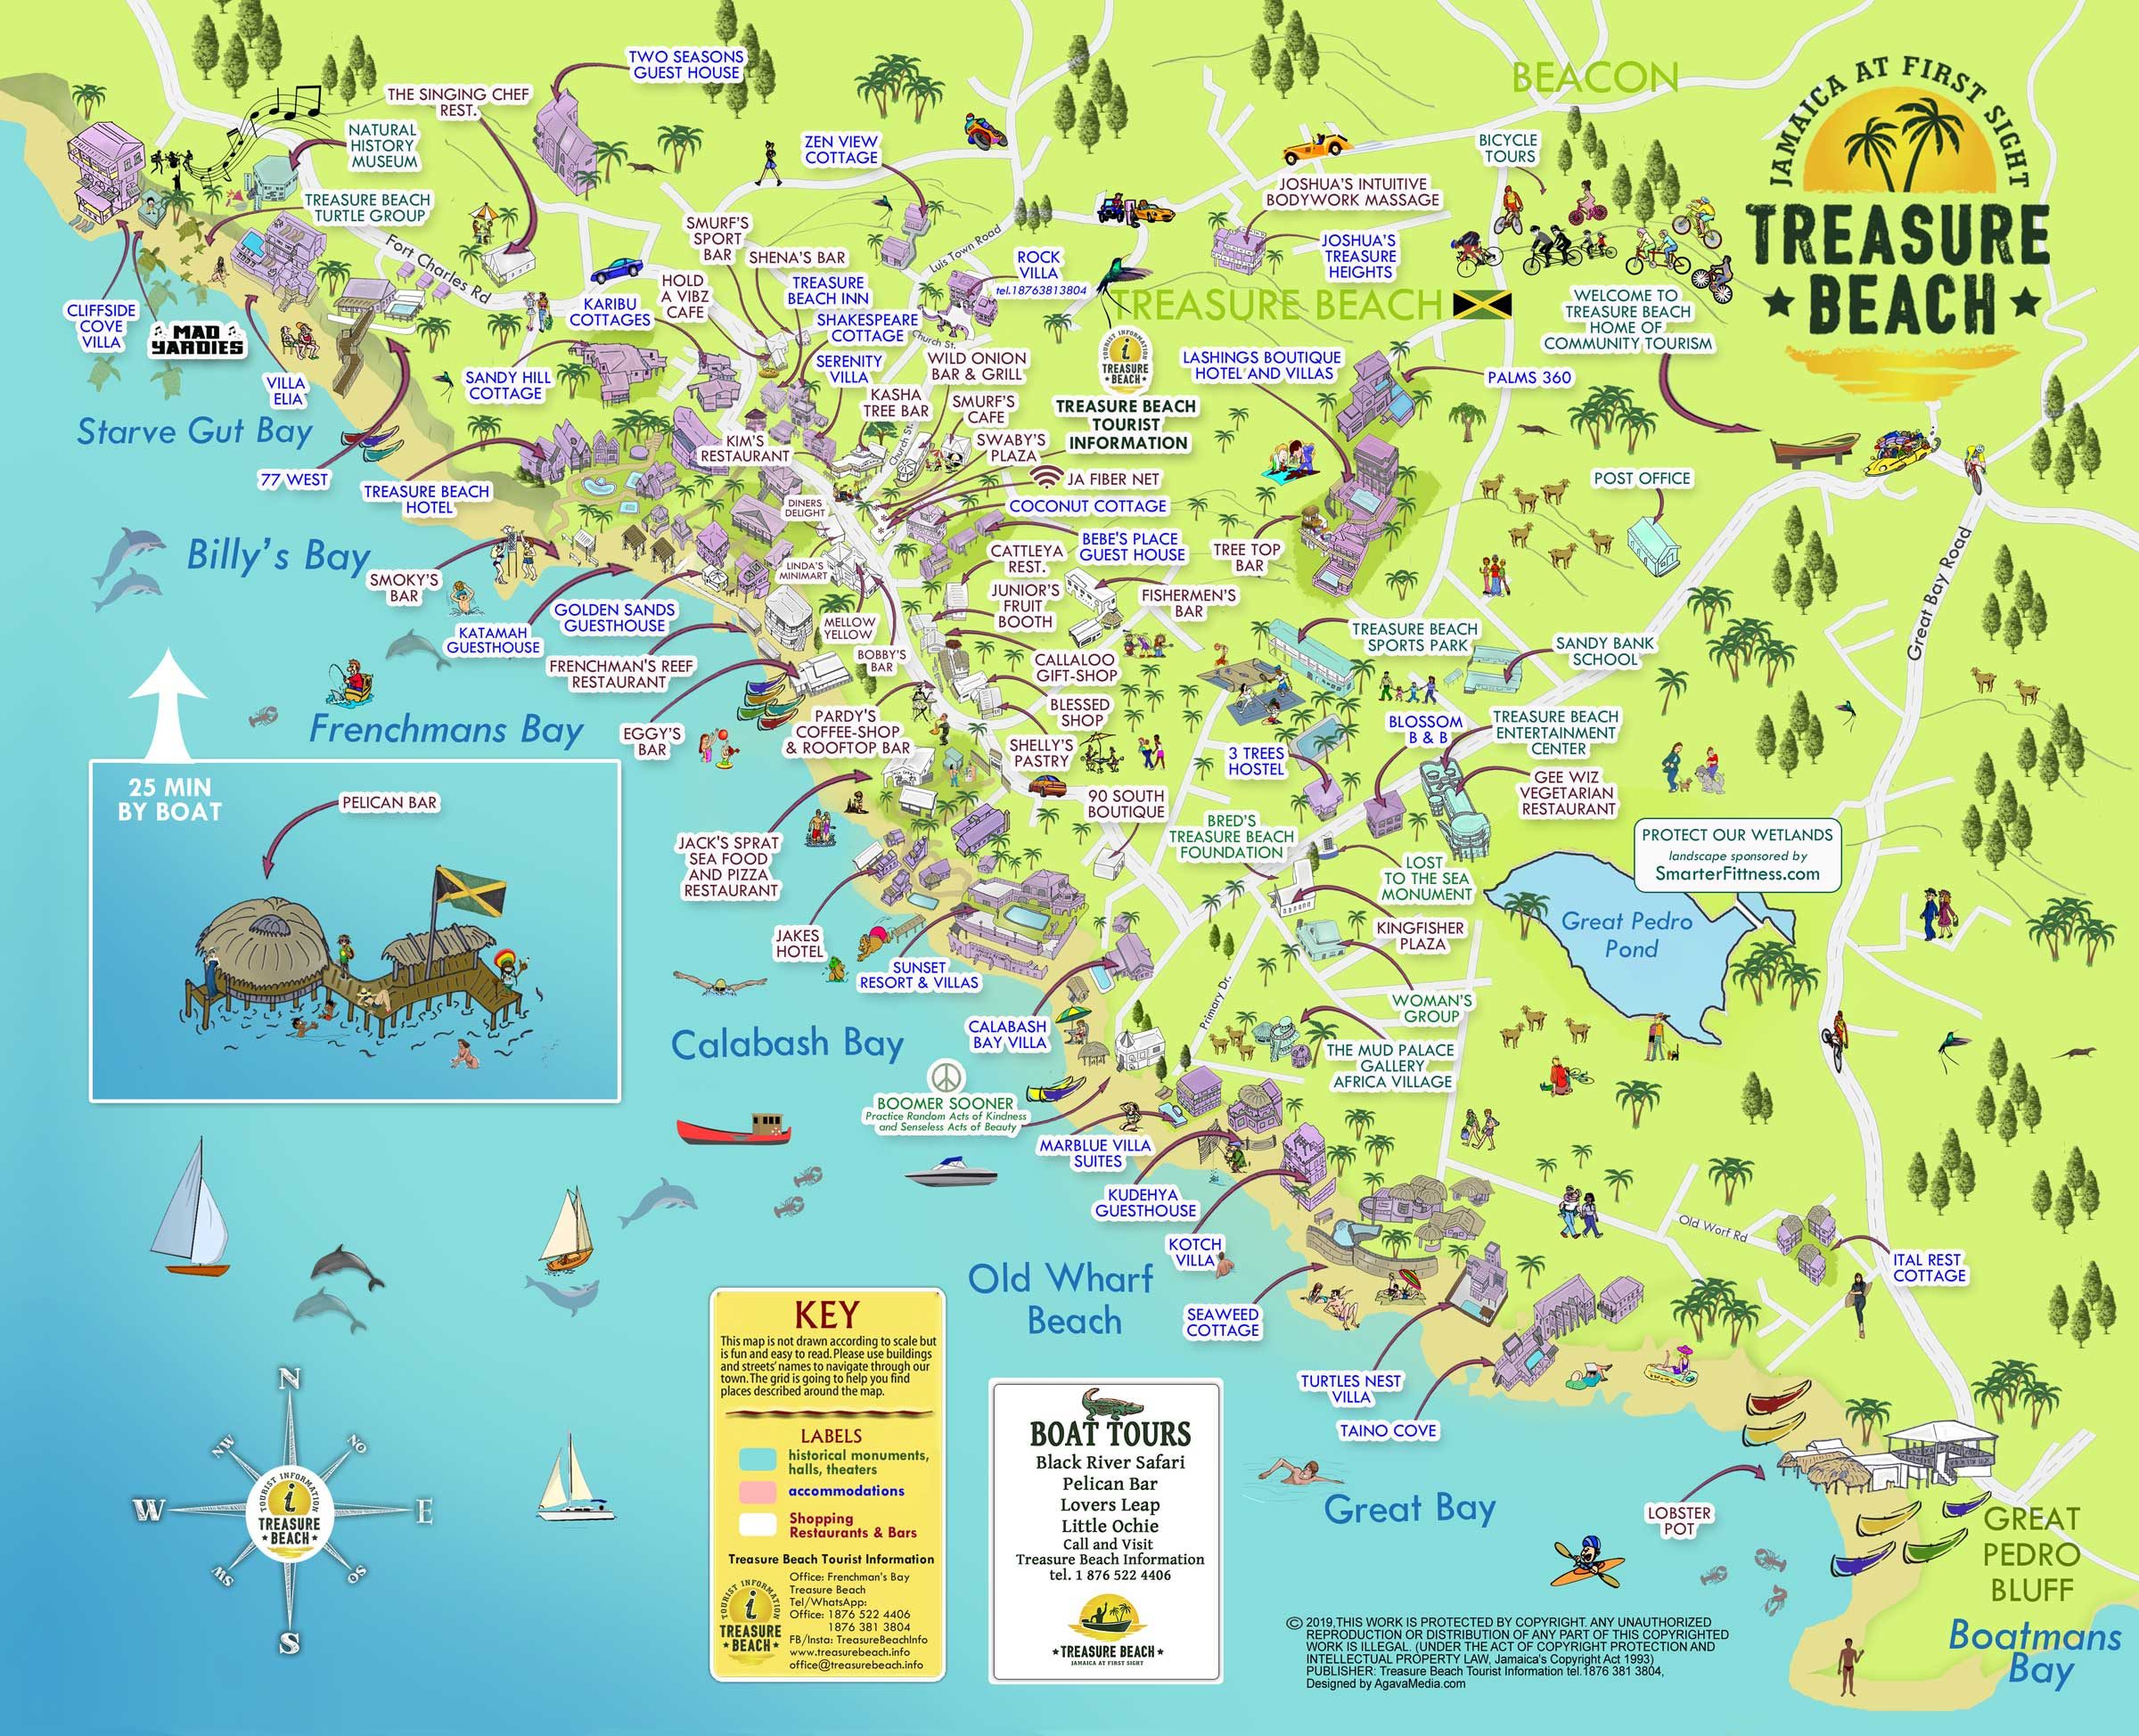 Treasure Beach Jamaica Map Treasure Beach Community Map 2021 – Jamaica at First Sight